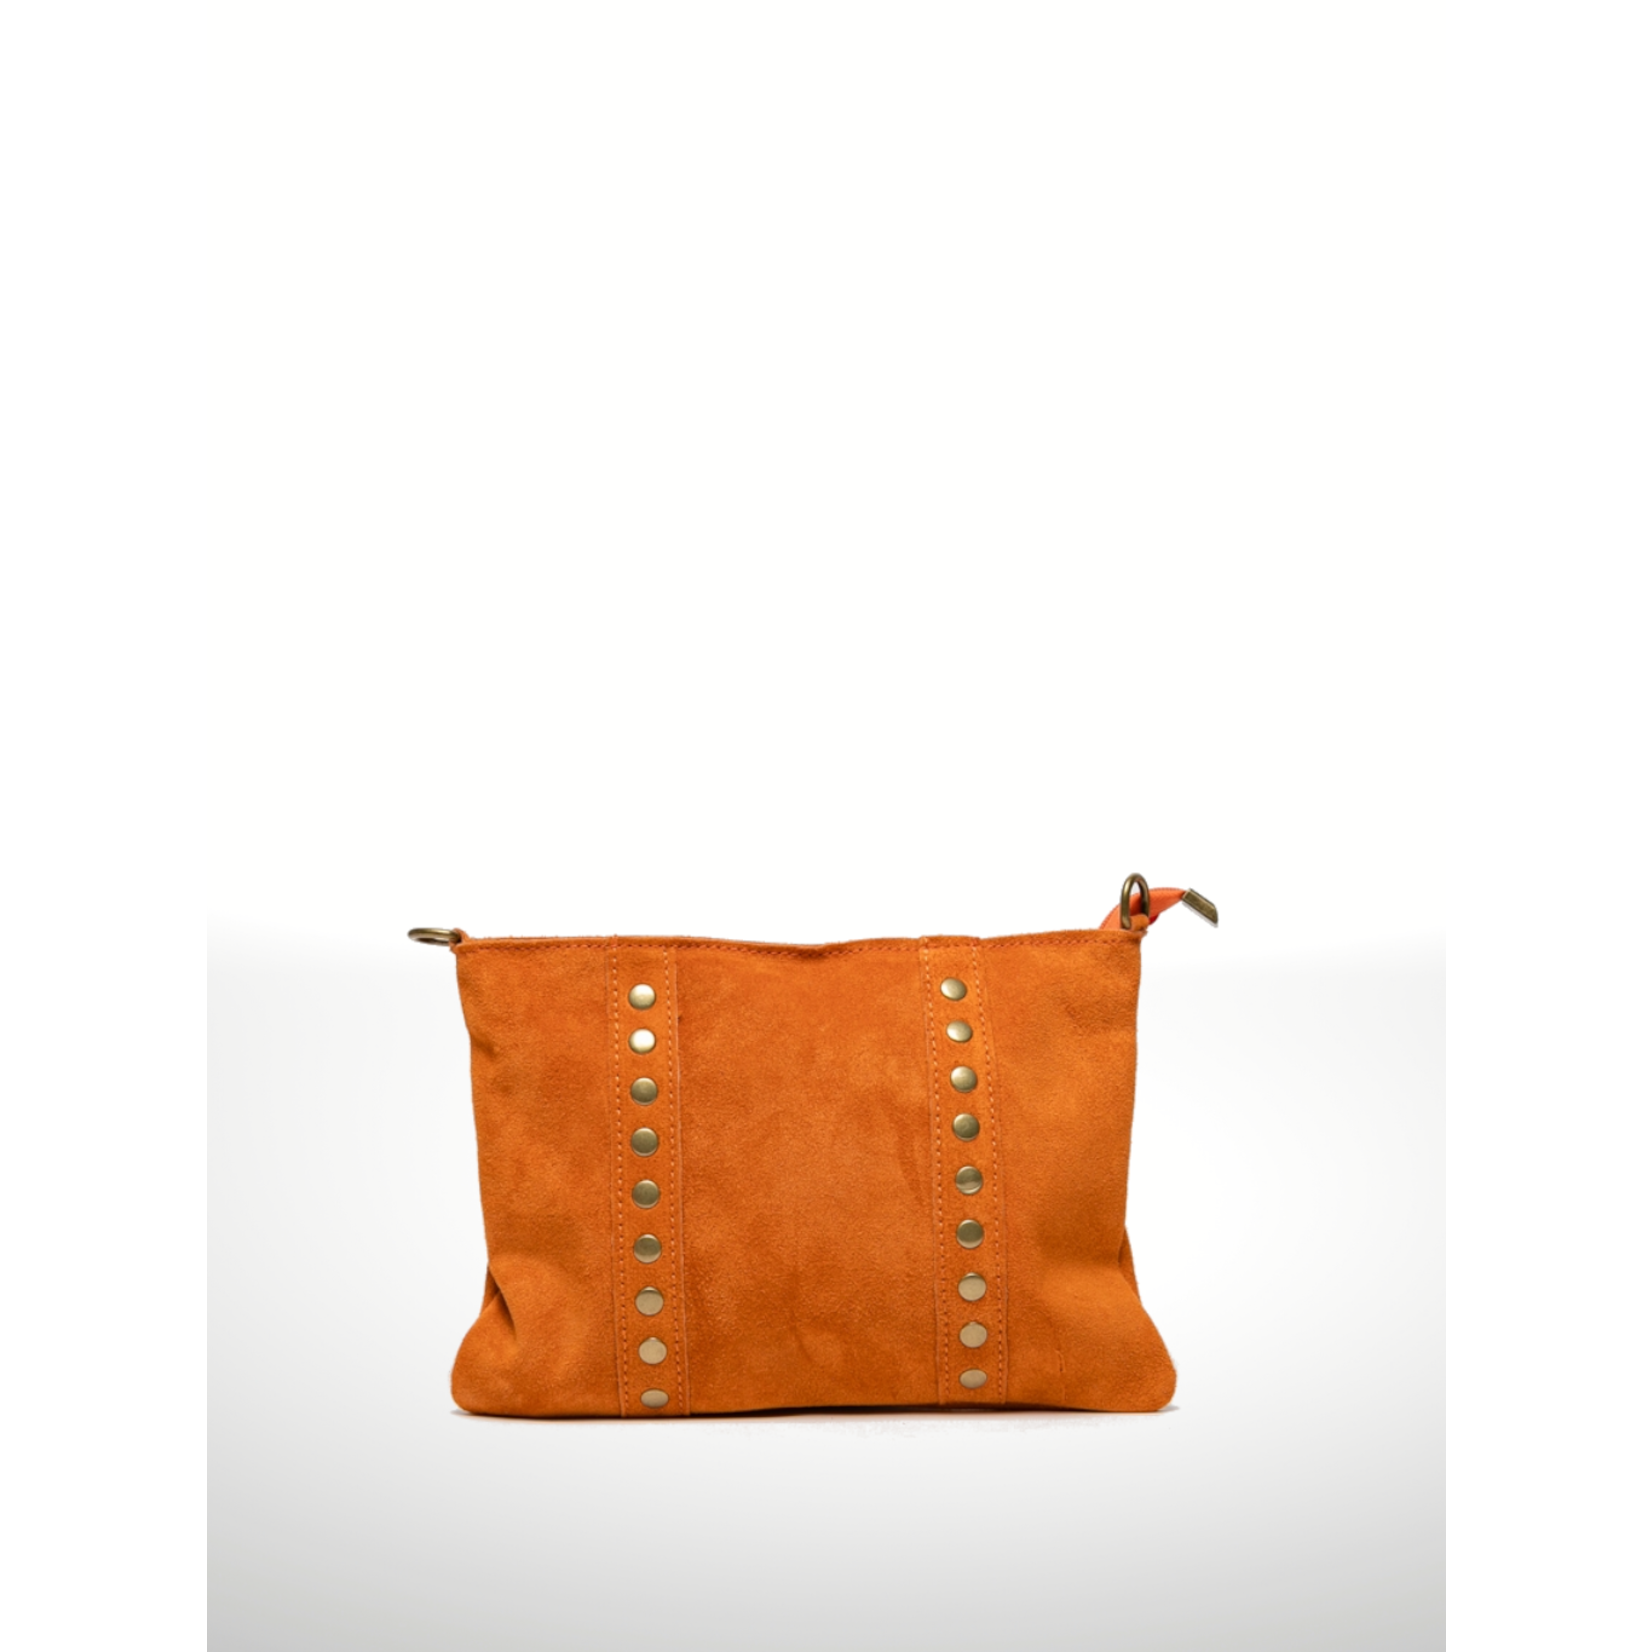 Italian’s Leather Celia Suede Leather Grommet Trim Handbag in Orange